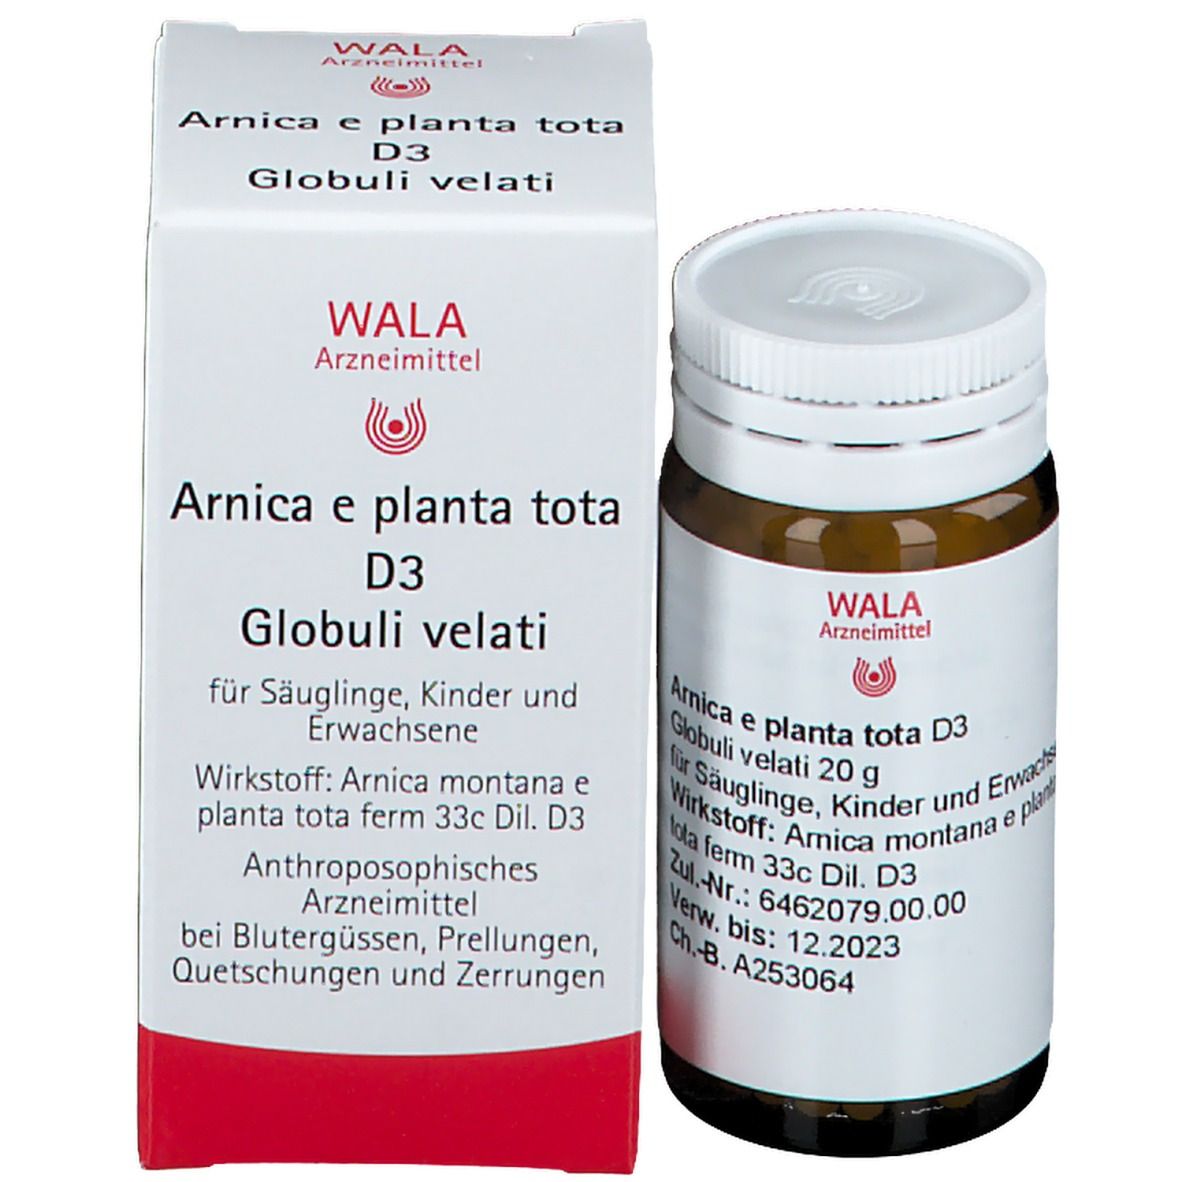 WALA® Arnica E Planta tota D 3 Globuli